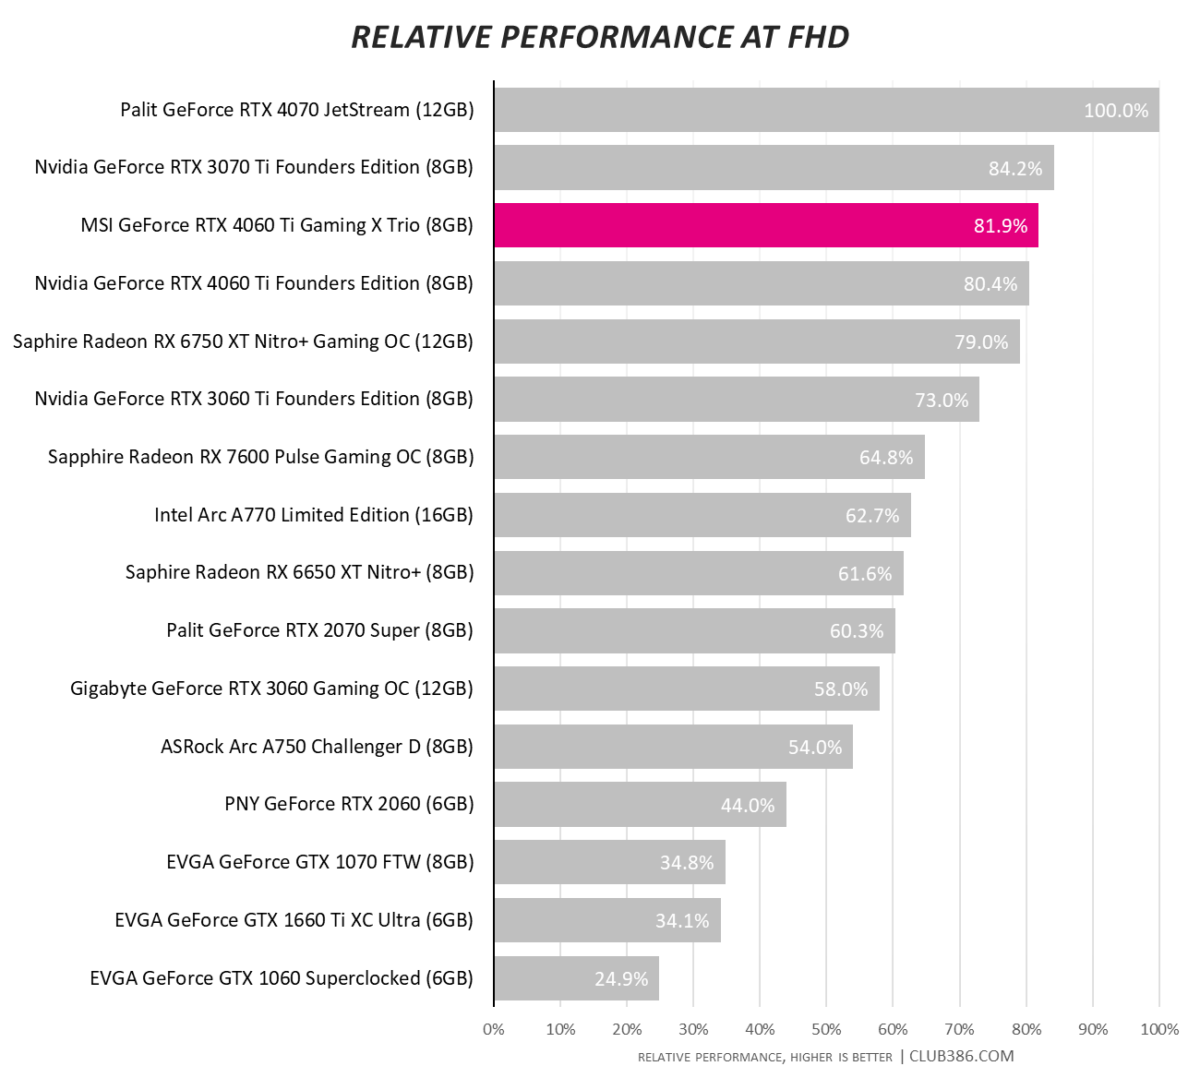 MSI GeForce RTX 4060 Ti Gaming X Trio - Relative Performance at FHD